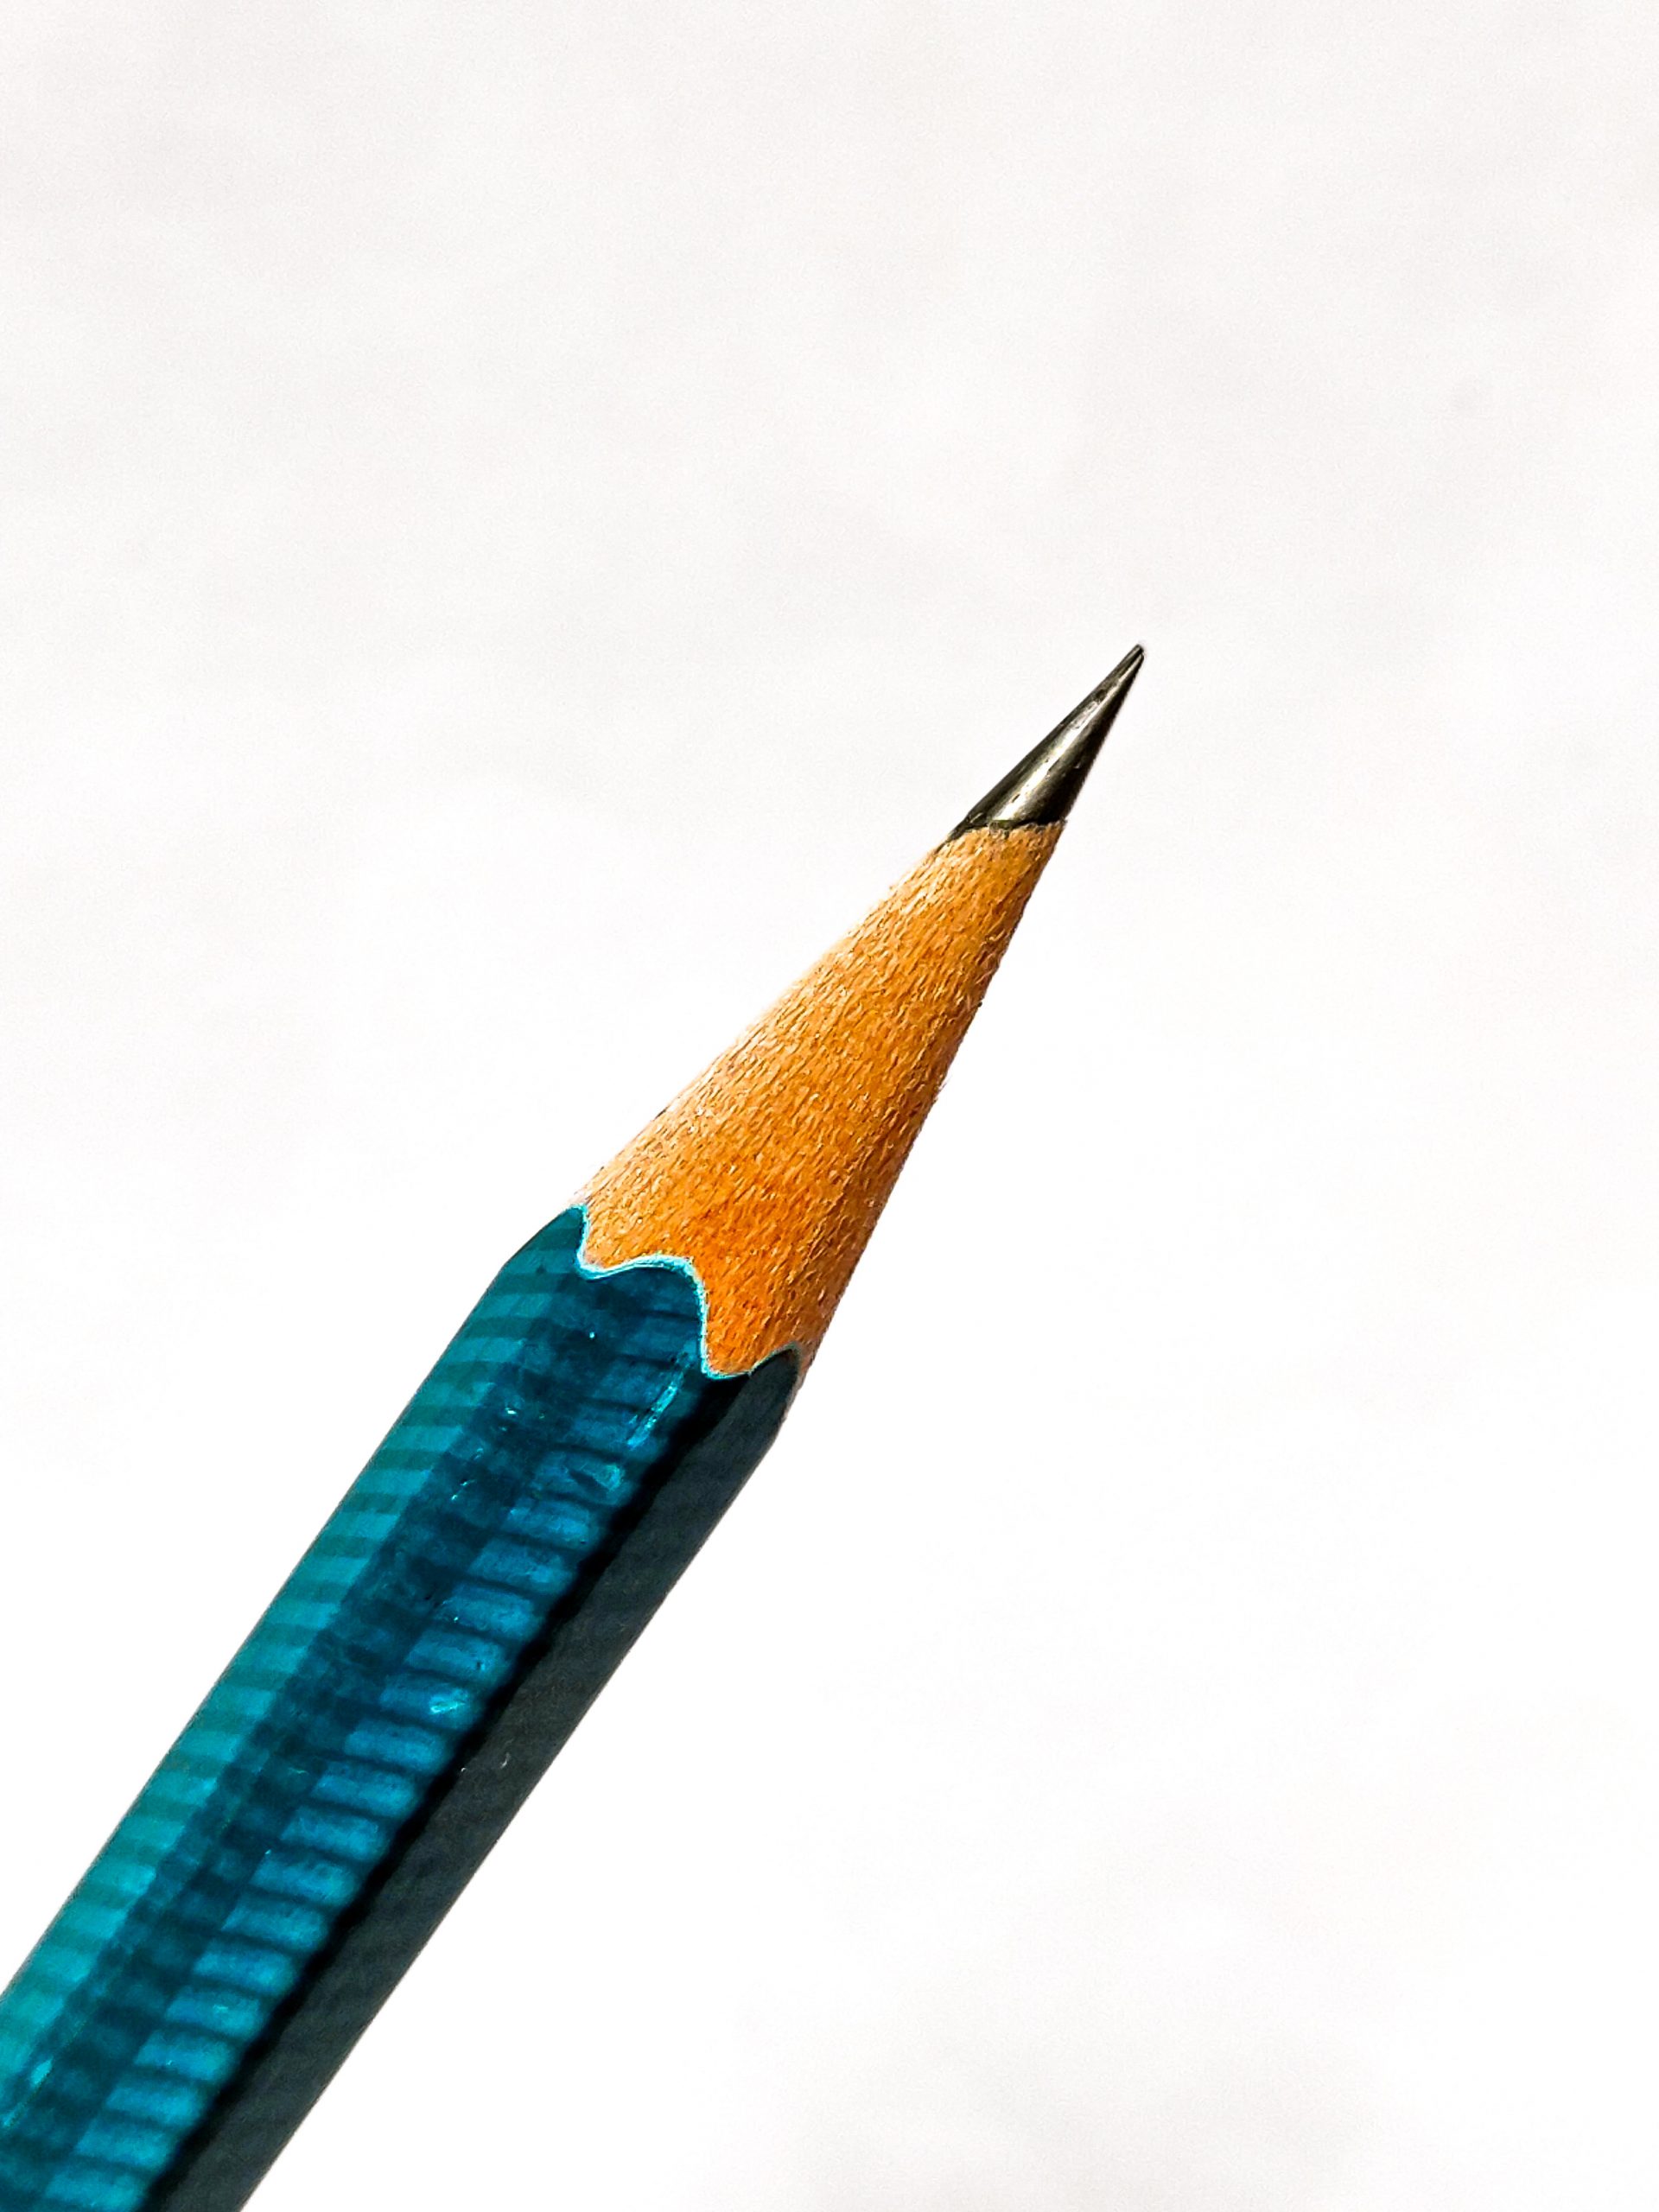 Tip of a pencil